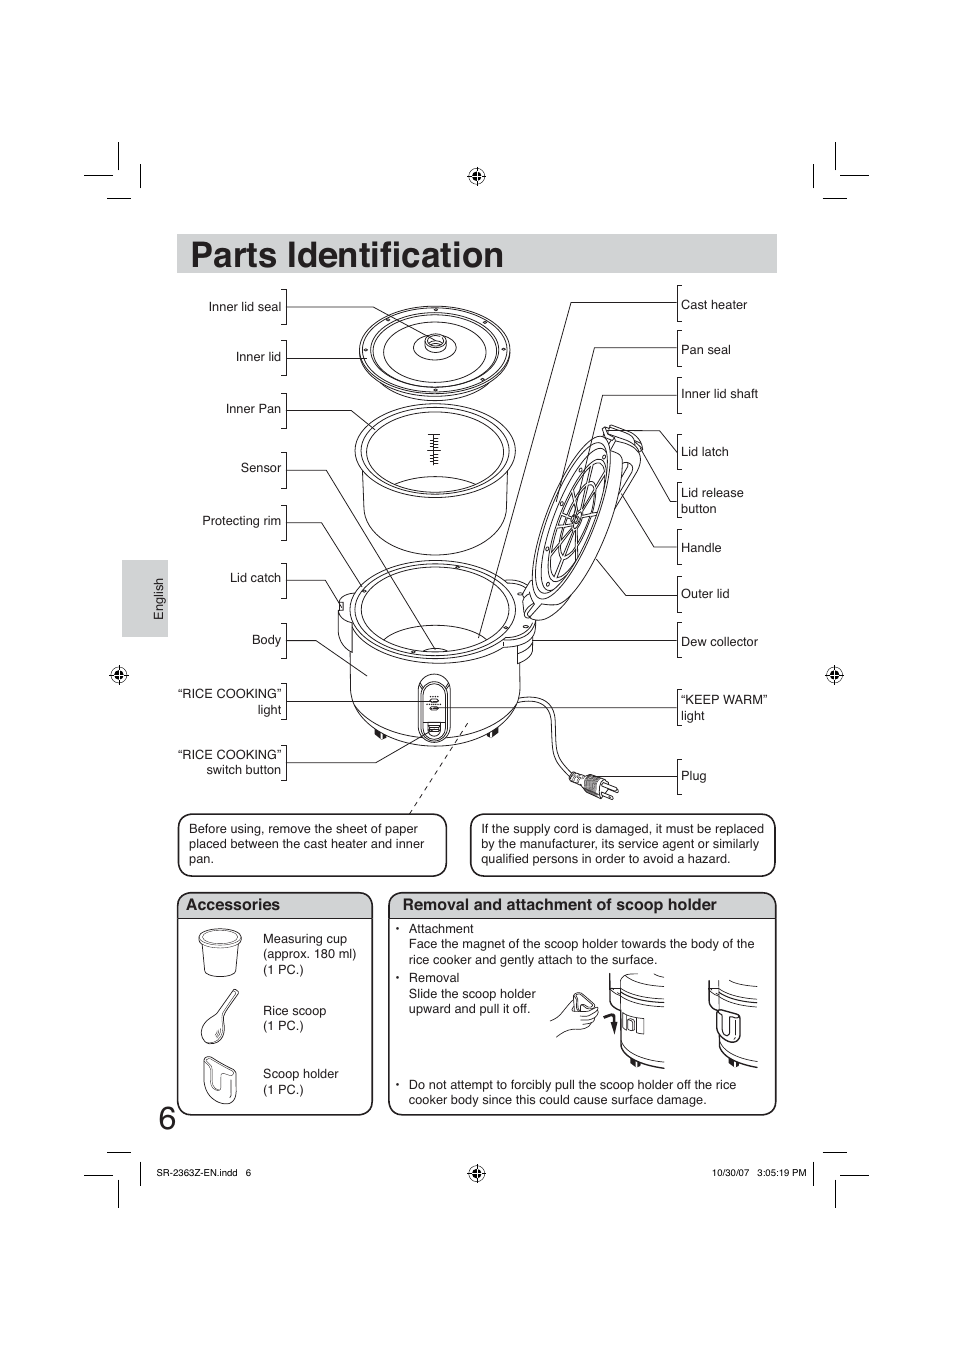 Parts identification, Parts identià cation | Panasonic SR2363Z User Manual | Page 6 / 63